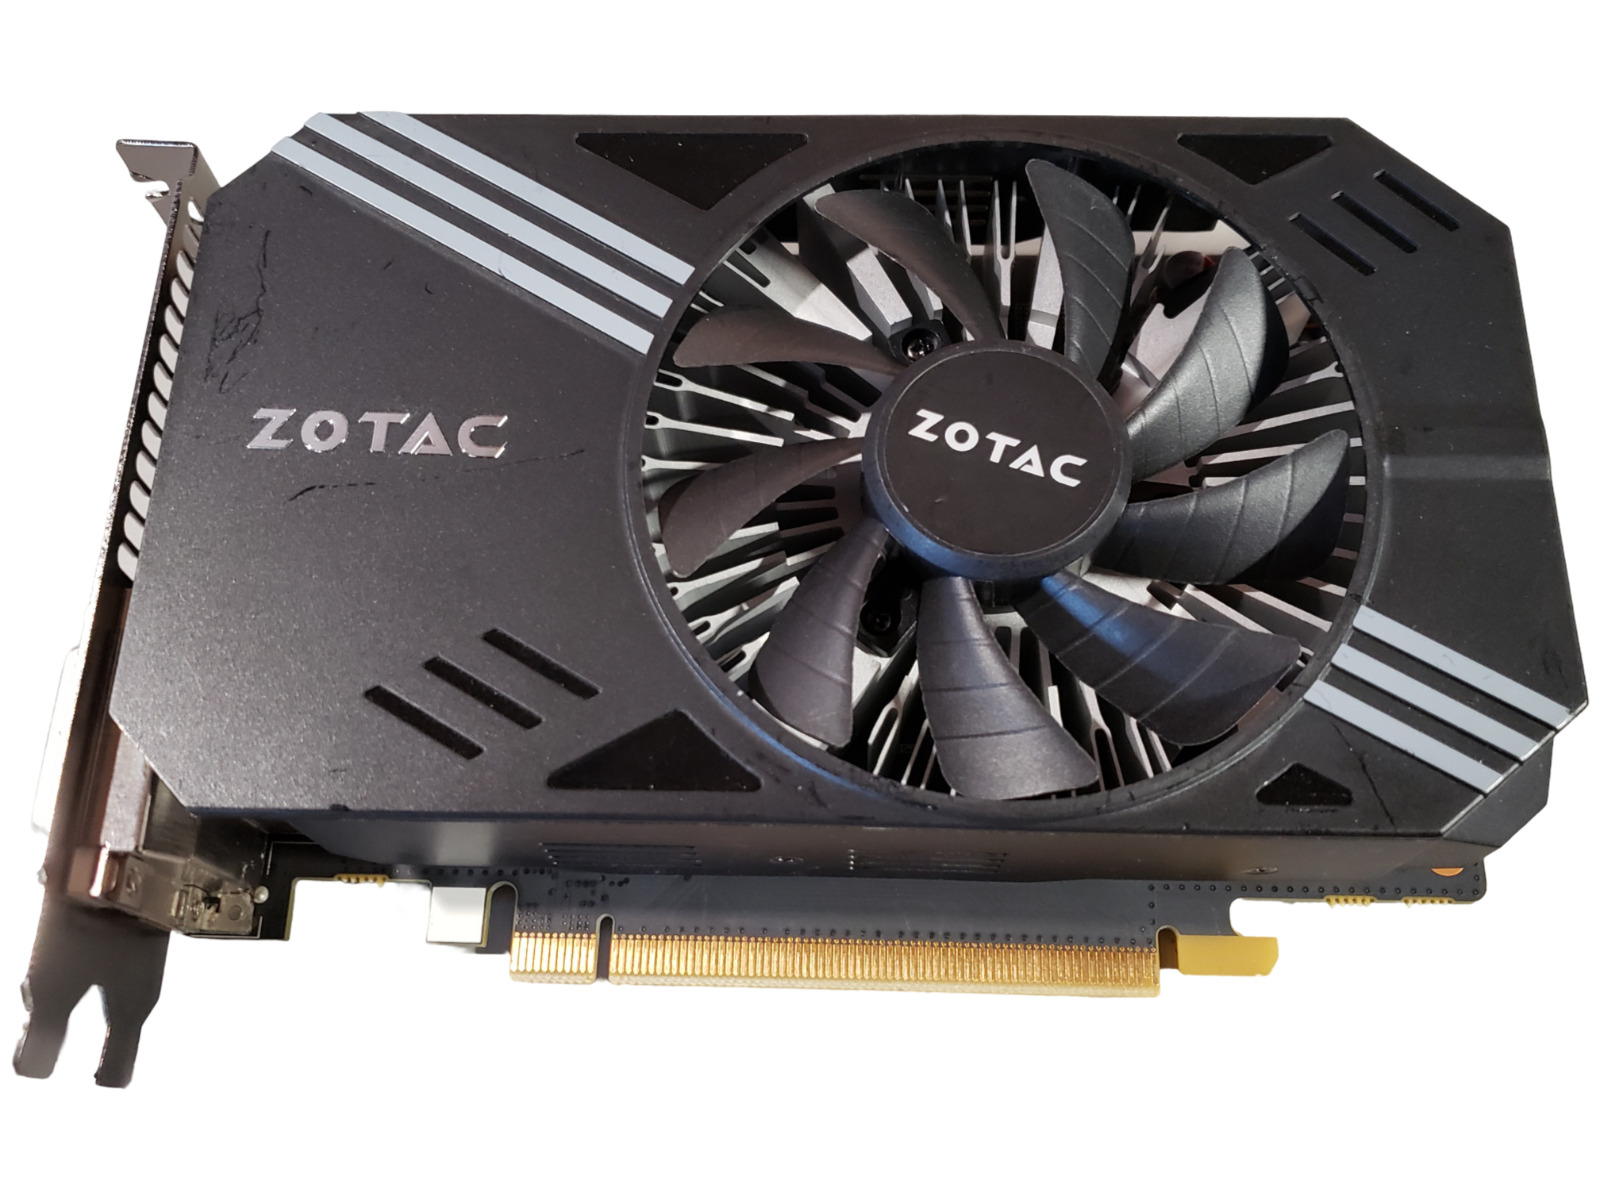 Zotac Nvidia Geforce GTX 950 2GB DDR5 Video Card 288-2N376-000Z8